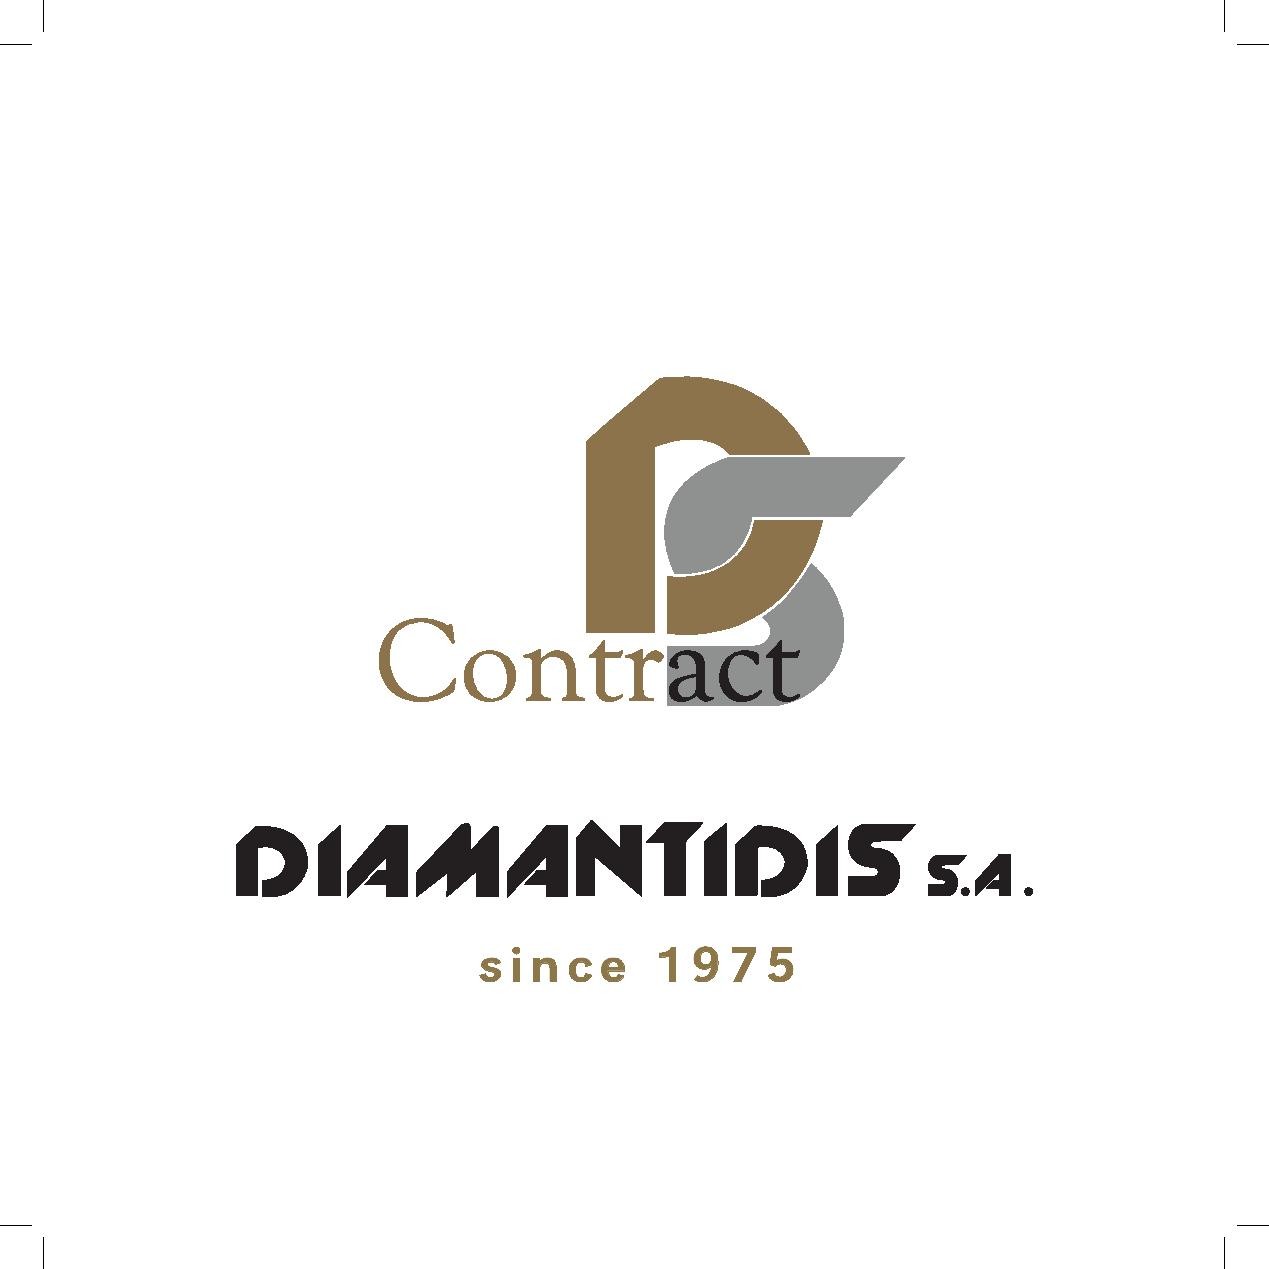 diamantidis-logo